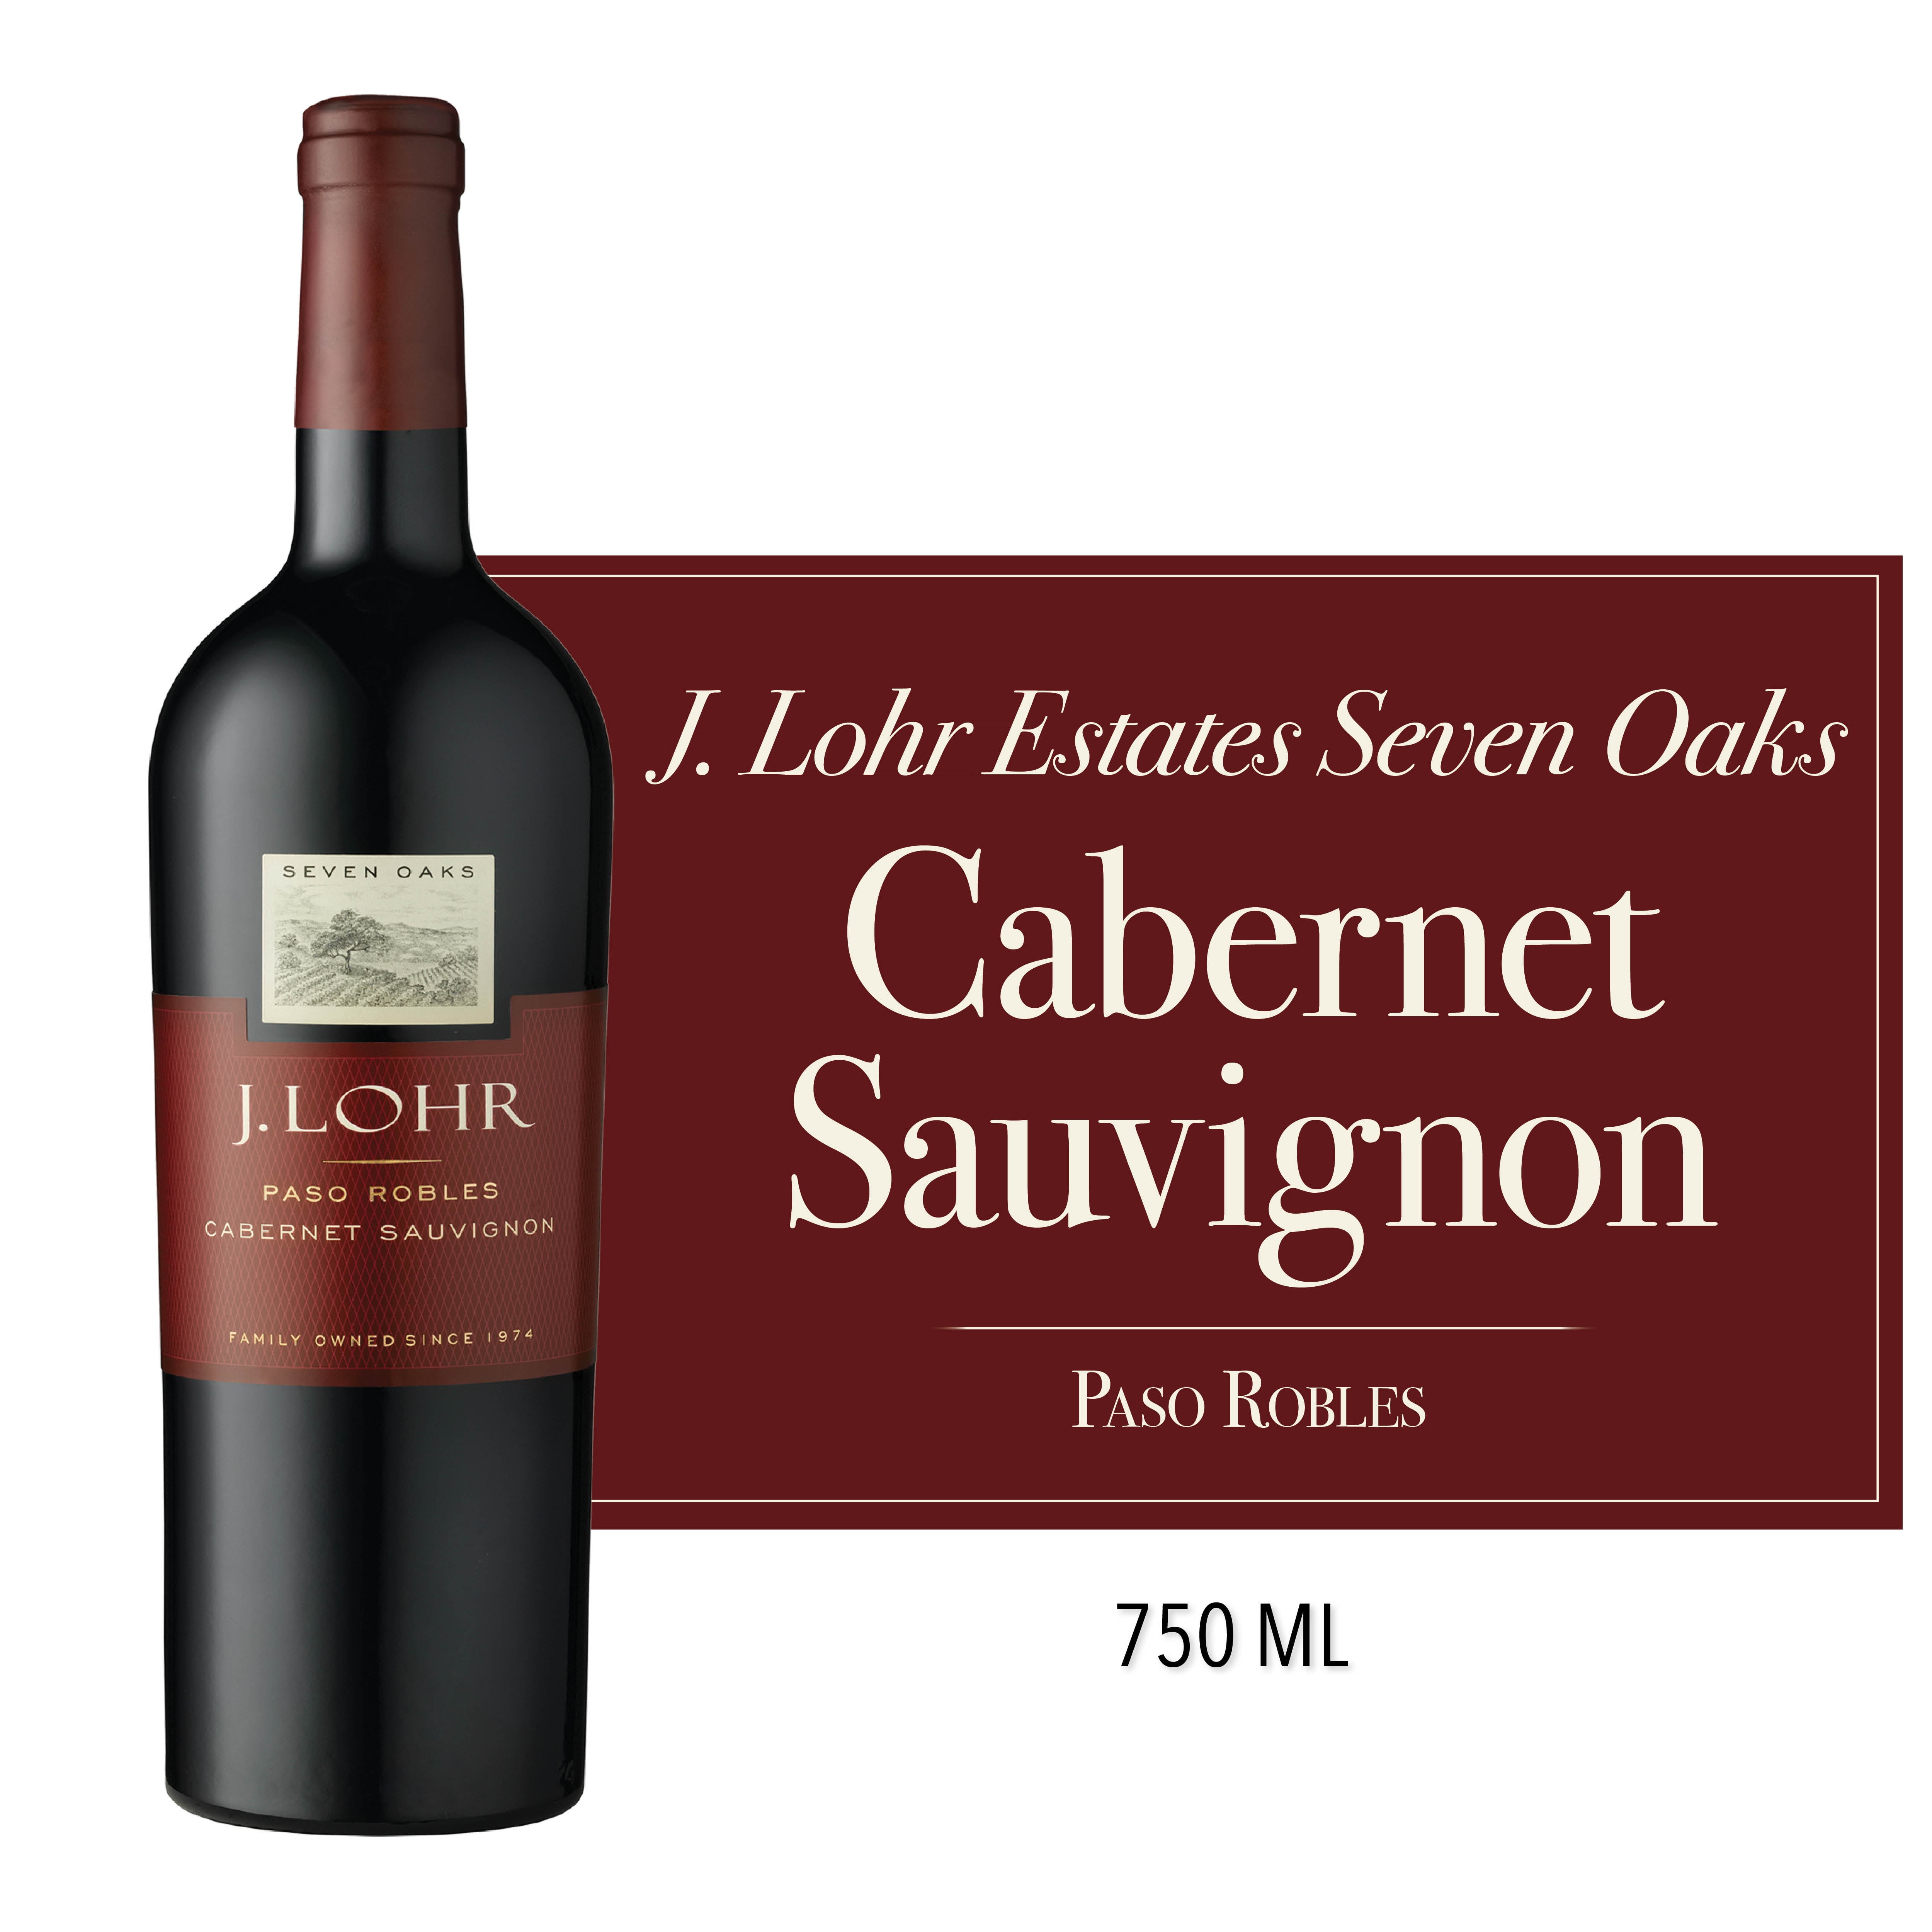 J. Lohr Estates Oaks Sauvignon, California Red Wine, 750 ml Bottle, ABV 14.4% - Walmart.com